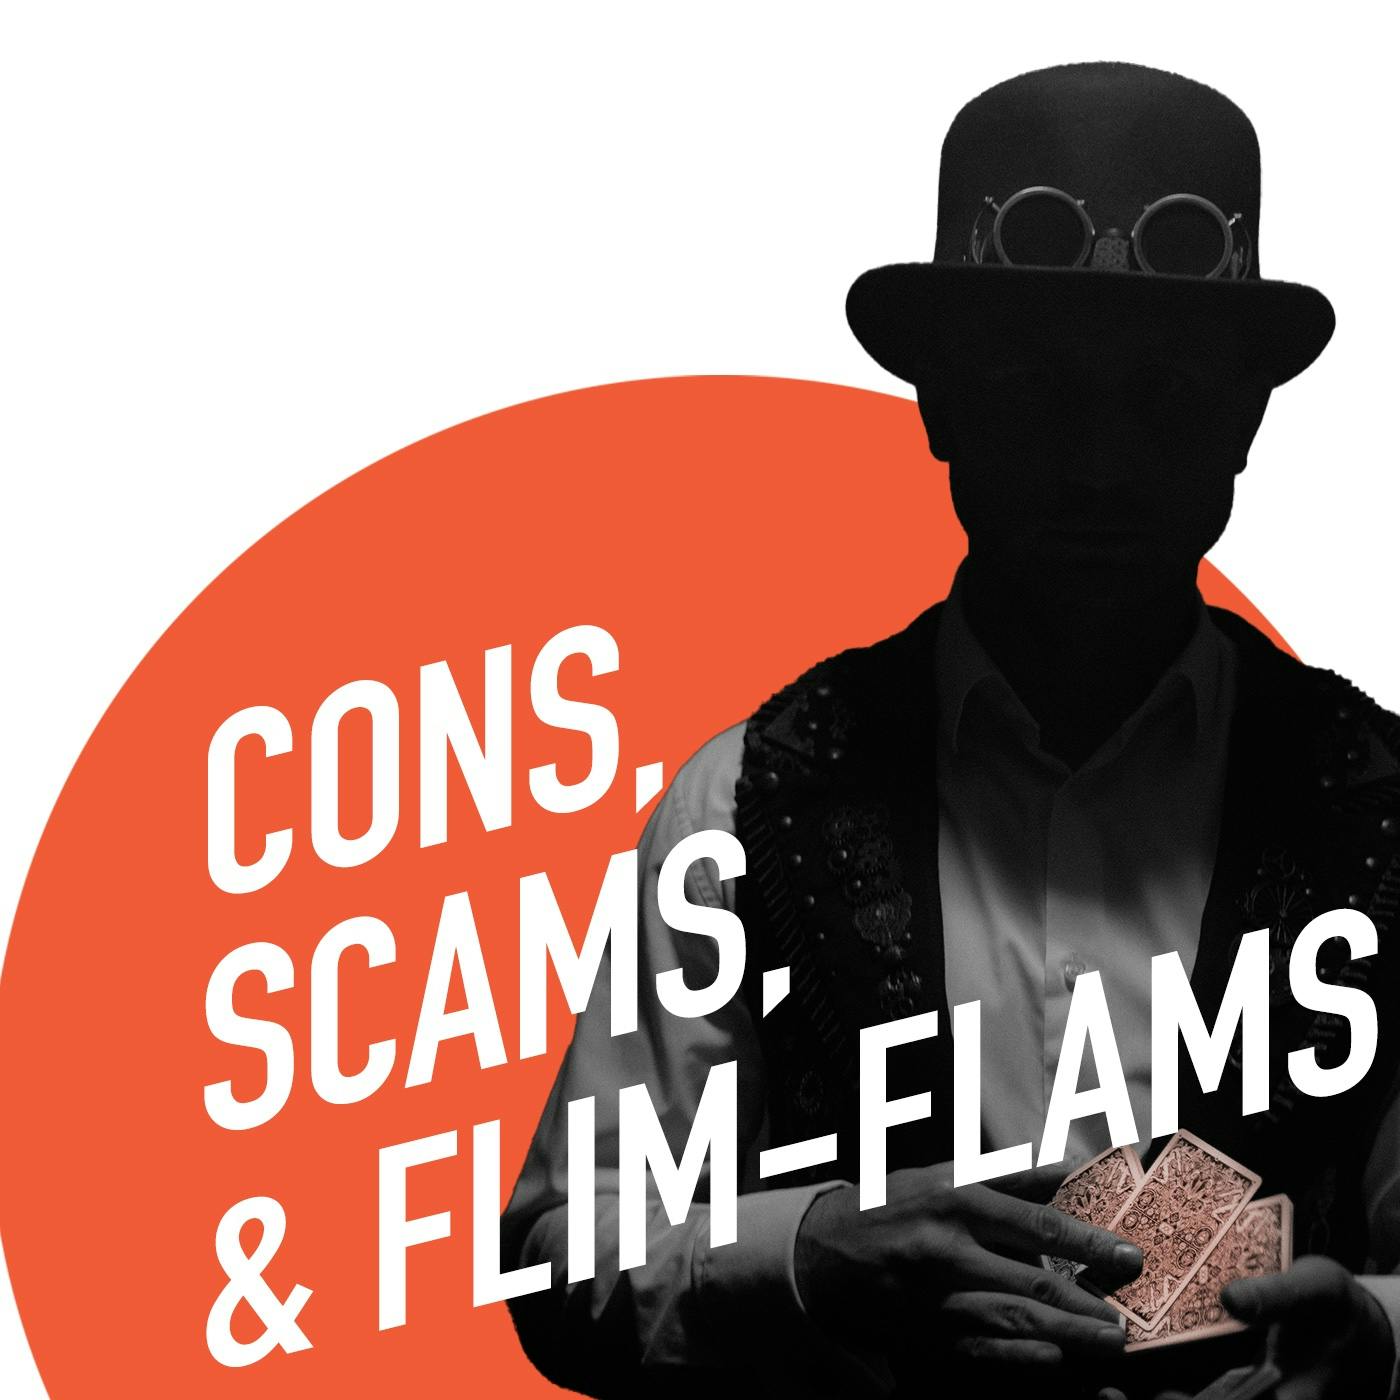 Bonus: Cons, Scams, and Flim-flams